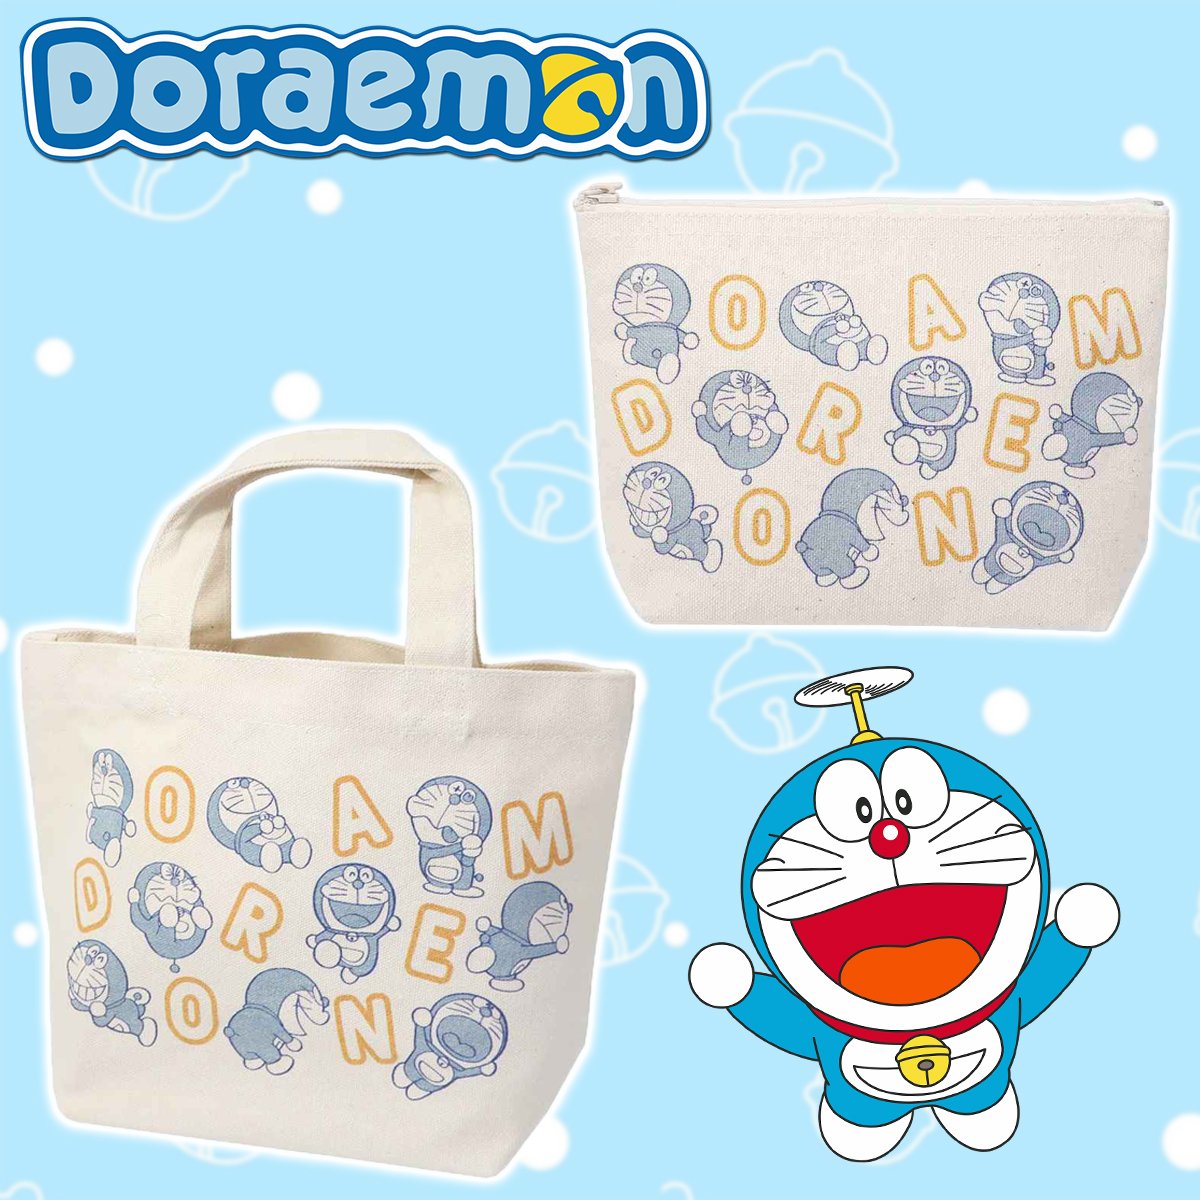 Bag - Doraemon Facial Expression (Japan Edition)